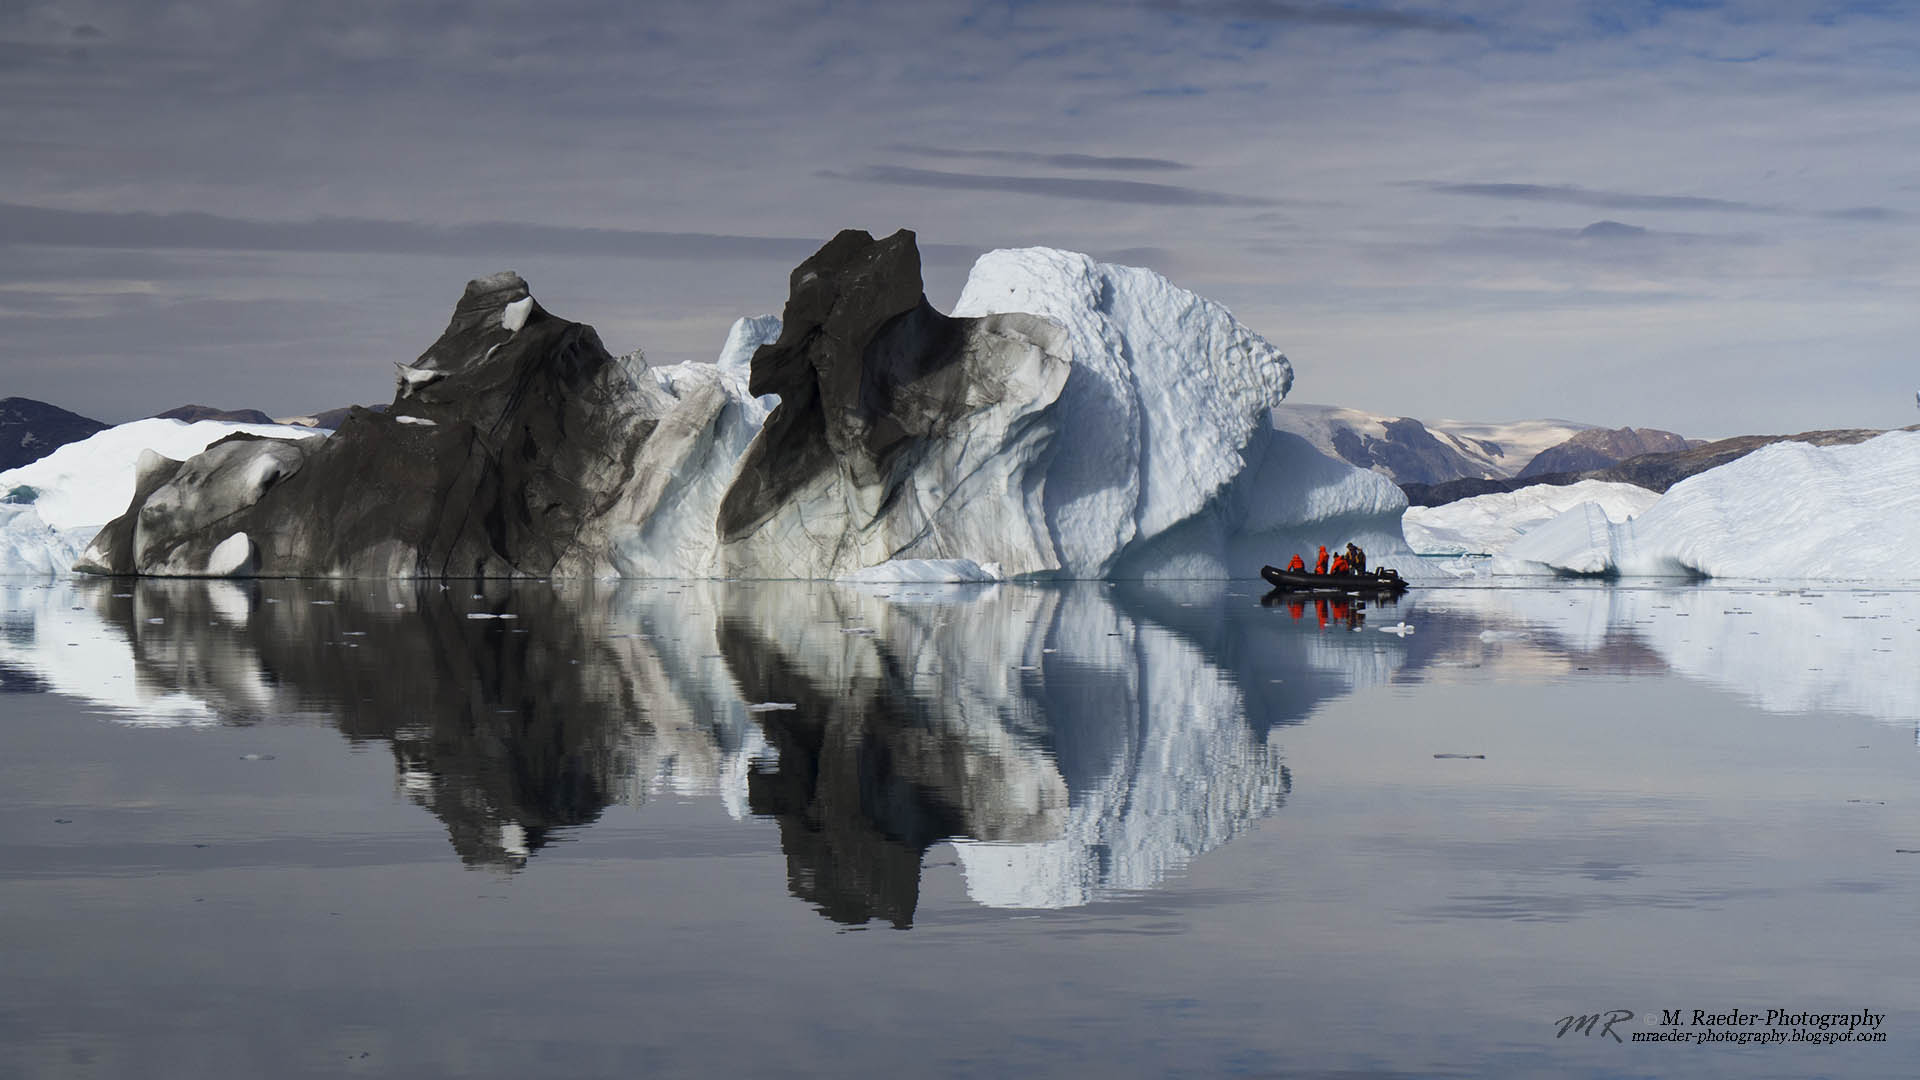 Cruising among gigantic icebergs